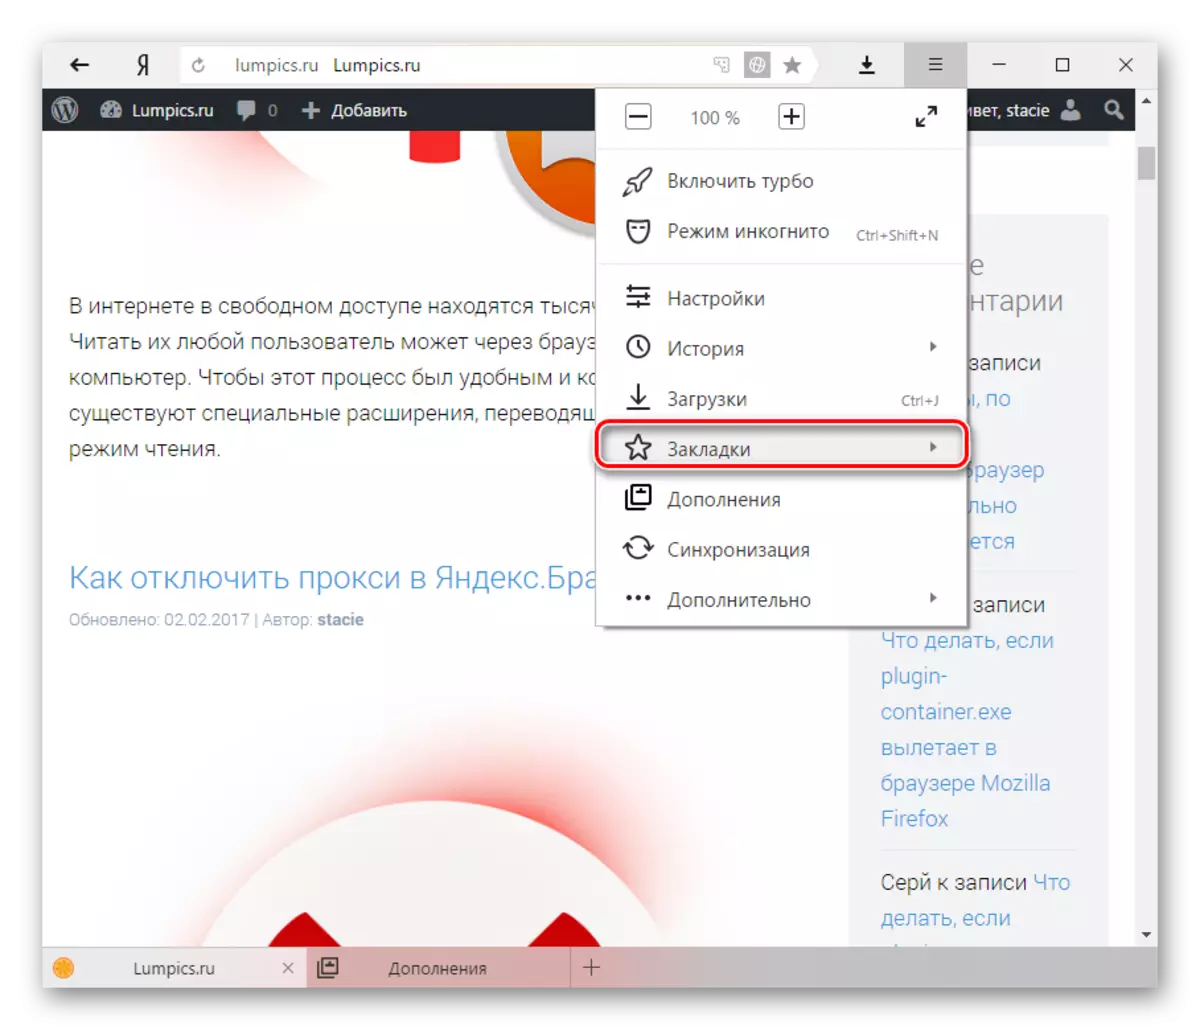 Yandex.browser में बुकमार्क